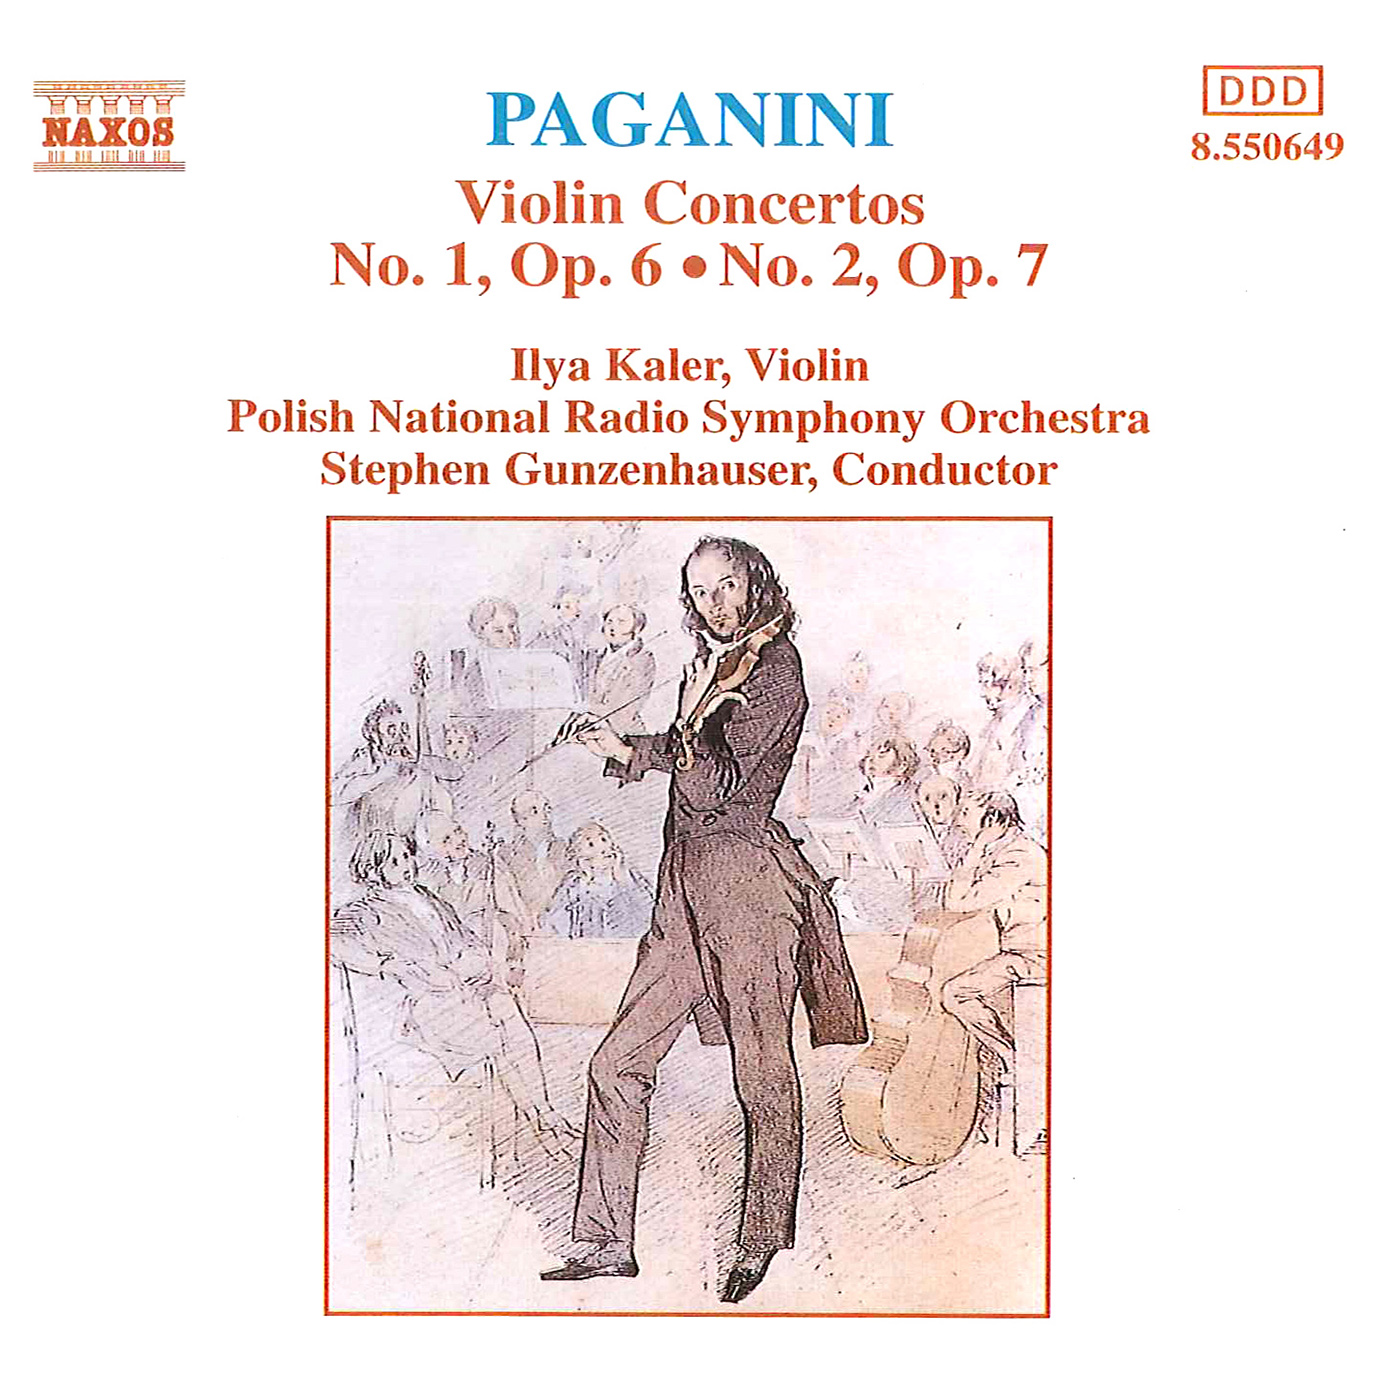 Violin Concerto No. 1 in E-Flat Major, Op. 6, MS 21: II. Adagio espressivo